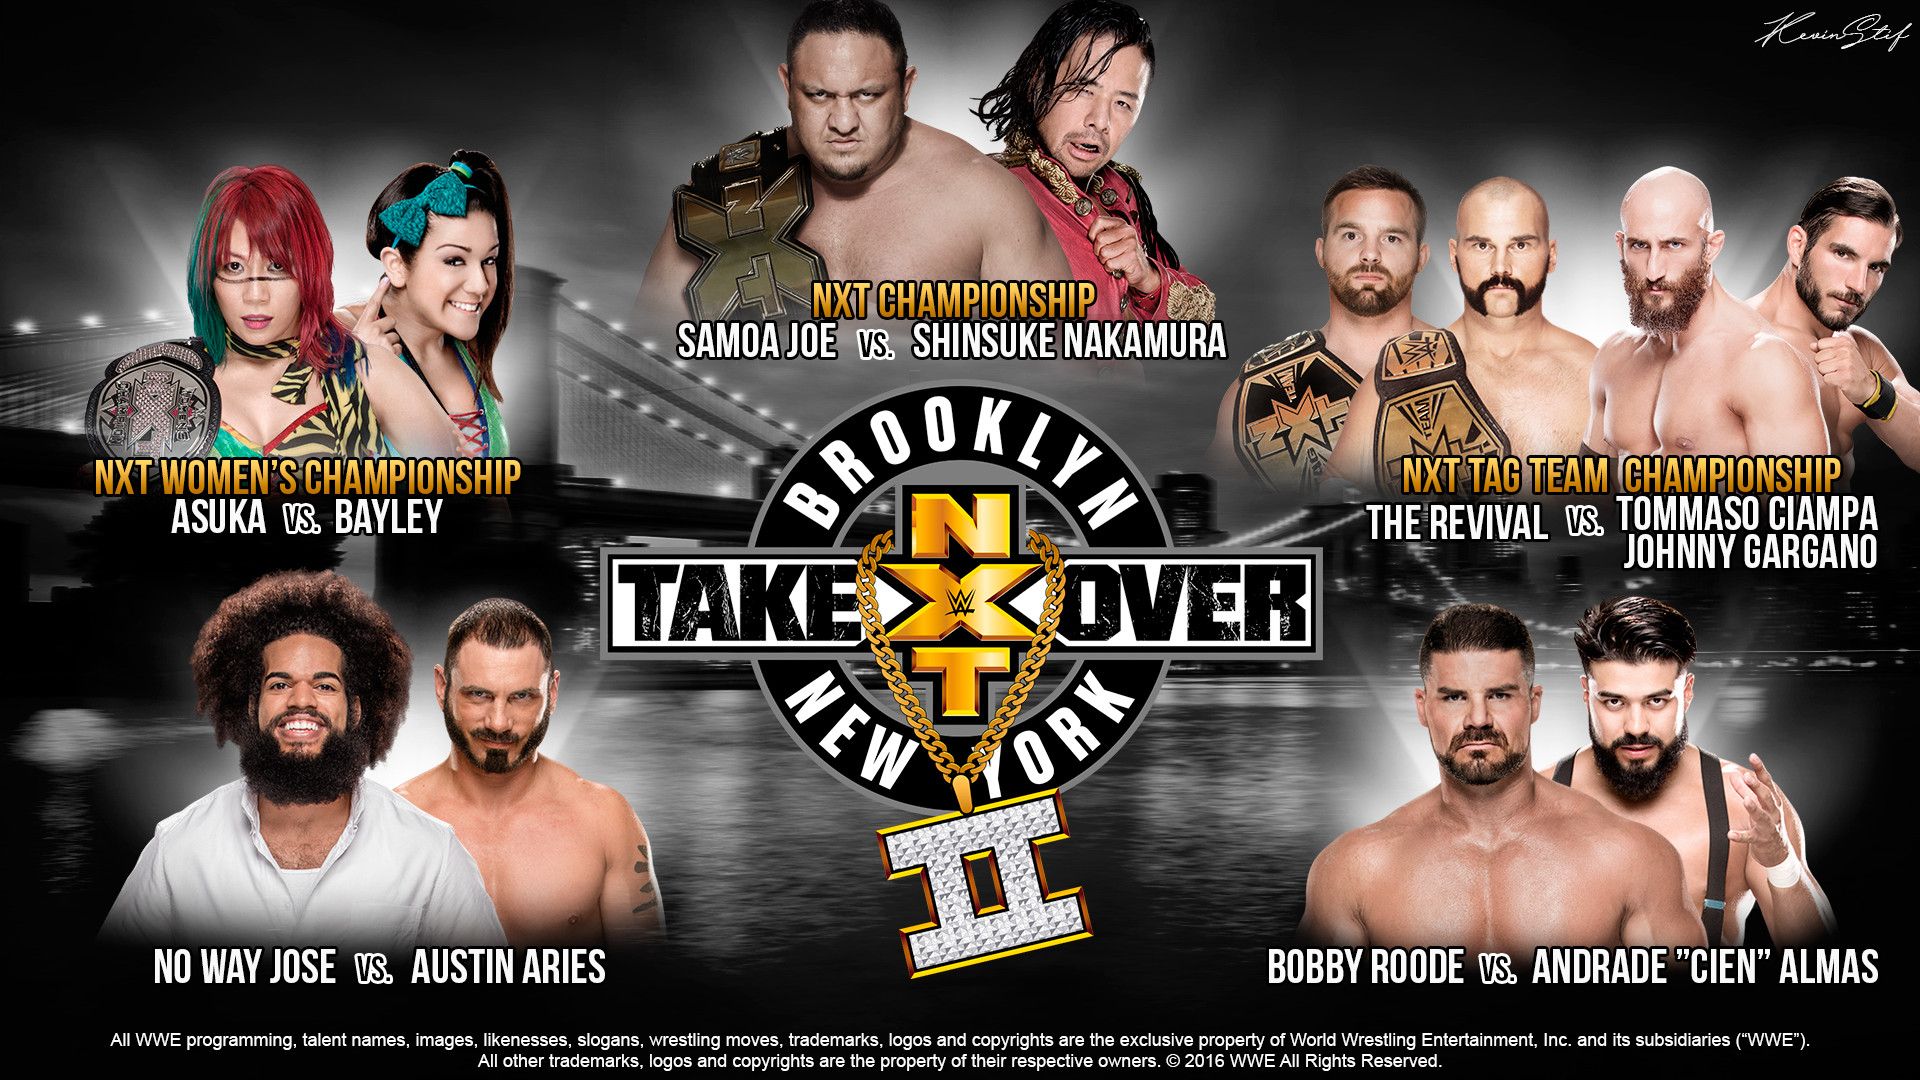 WWE NXT Wallpaper